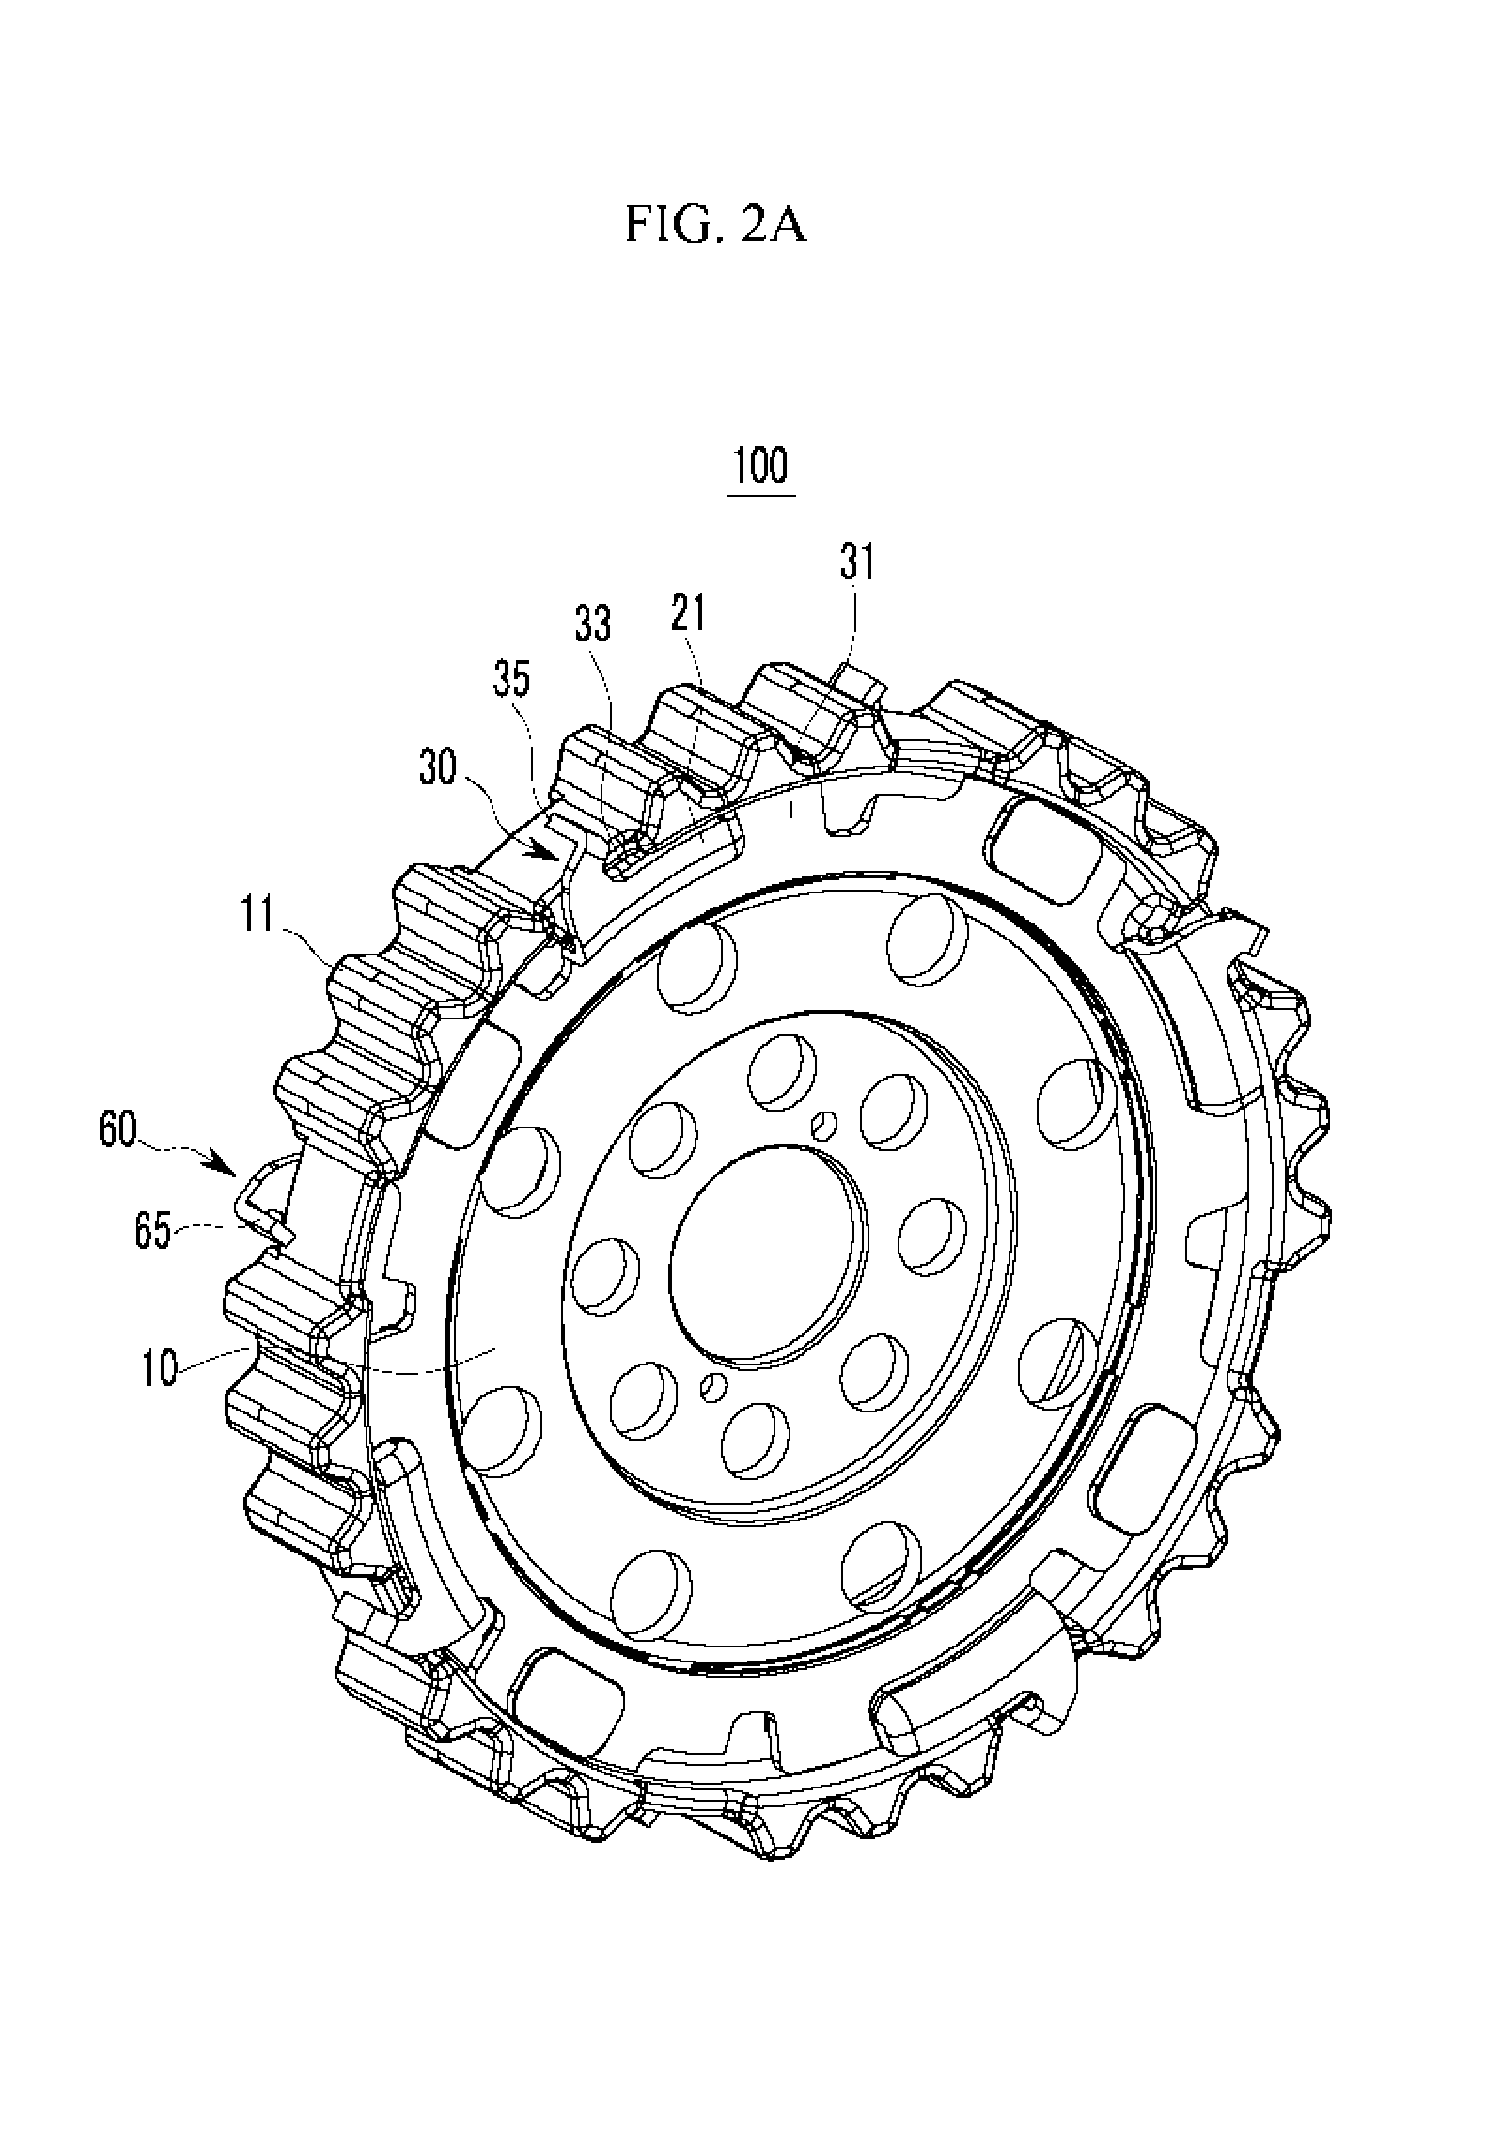 Motor coupling device